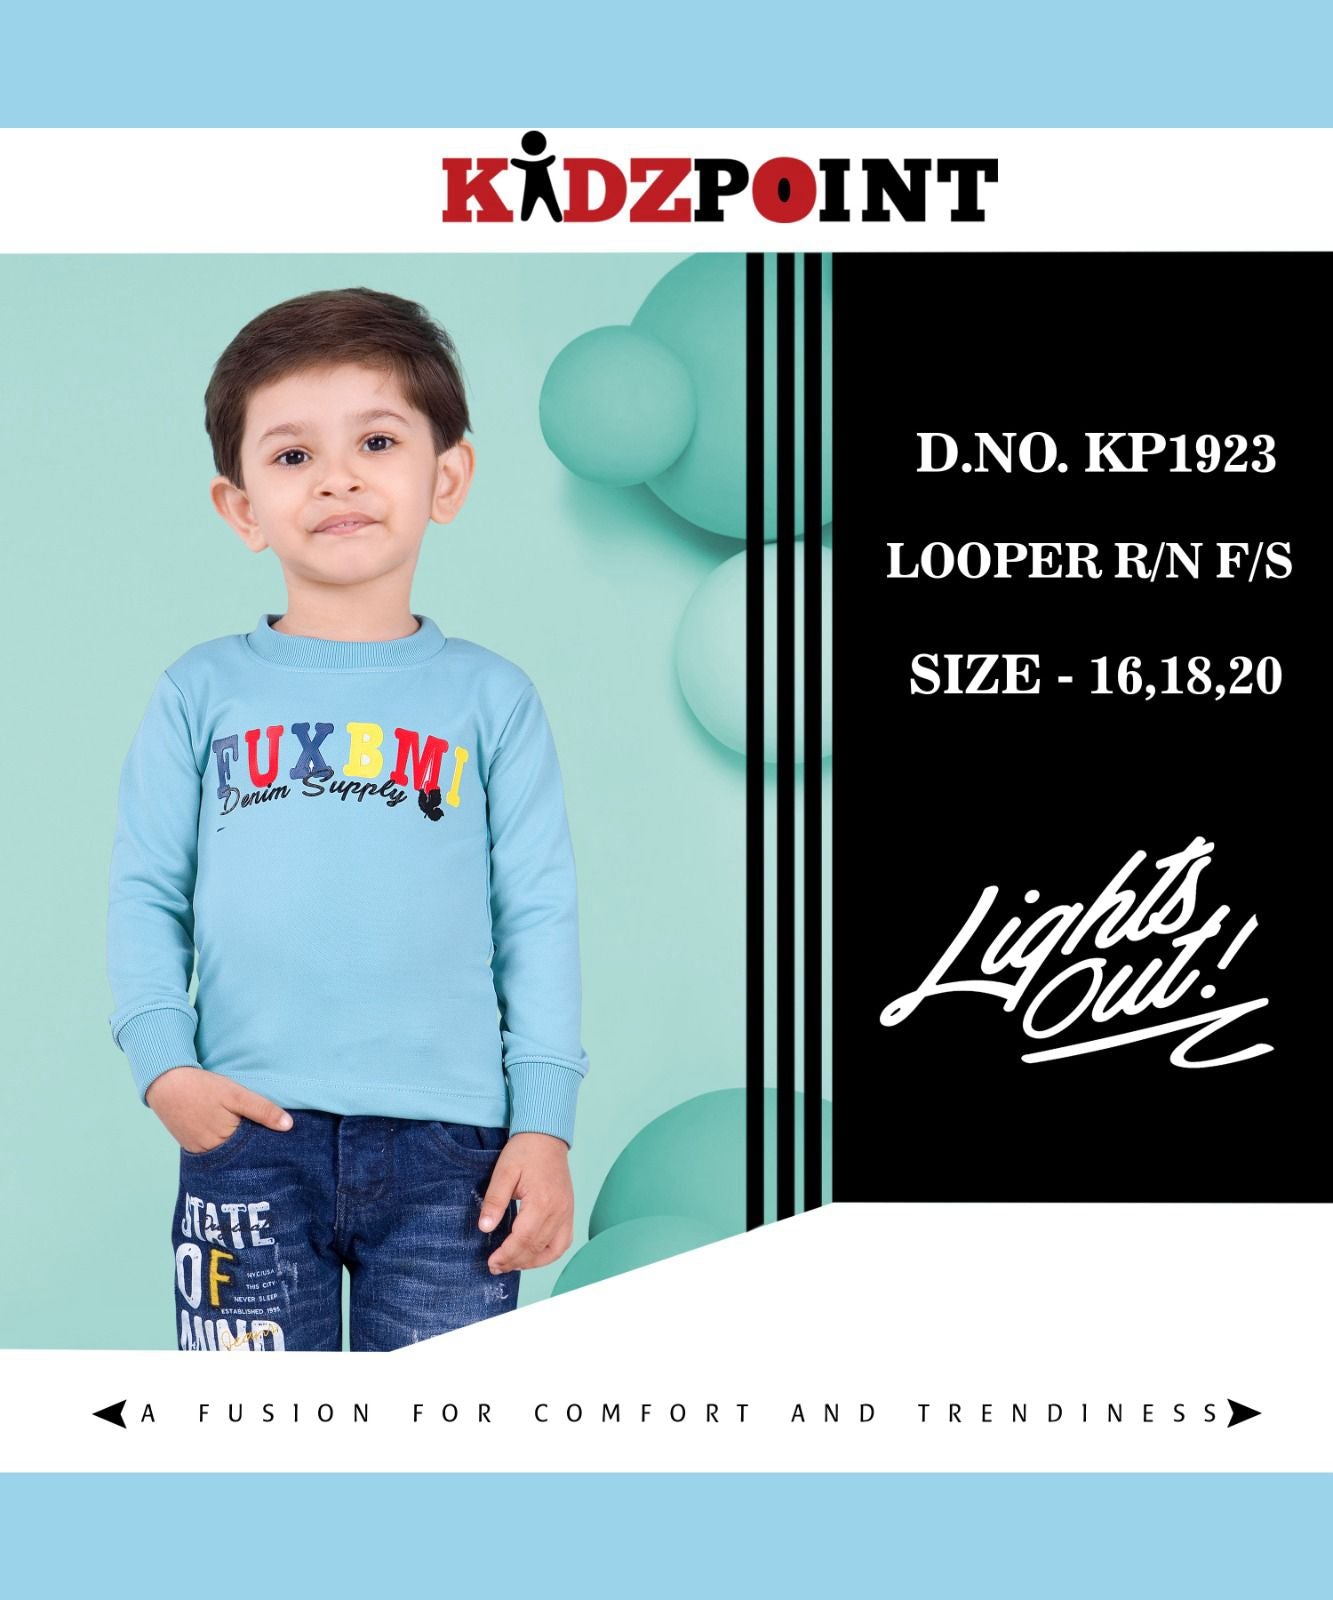 1923 Kidzpoint Looper Boys Tshirt